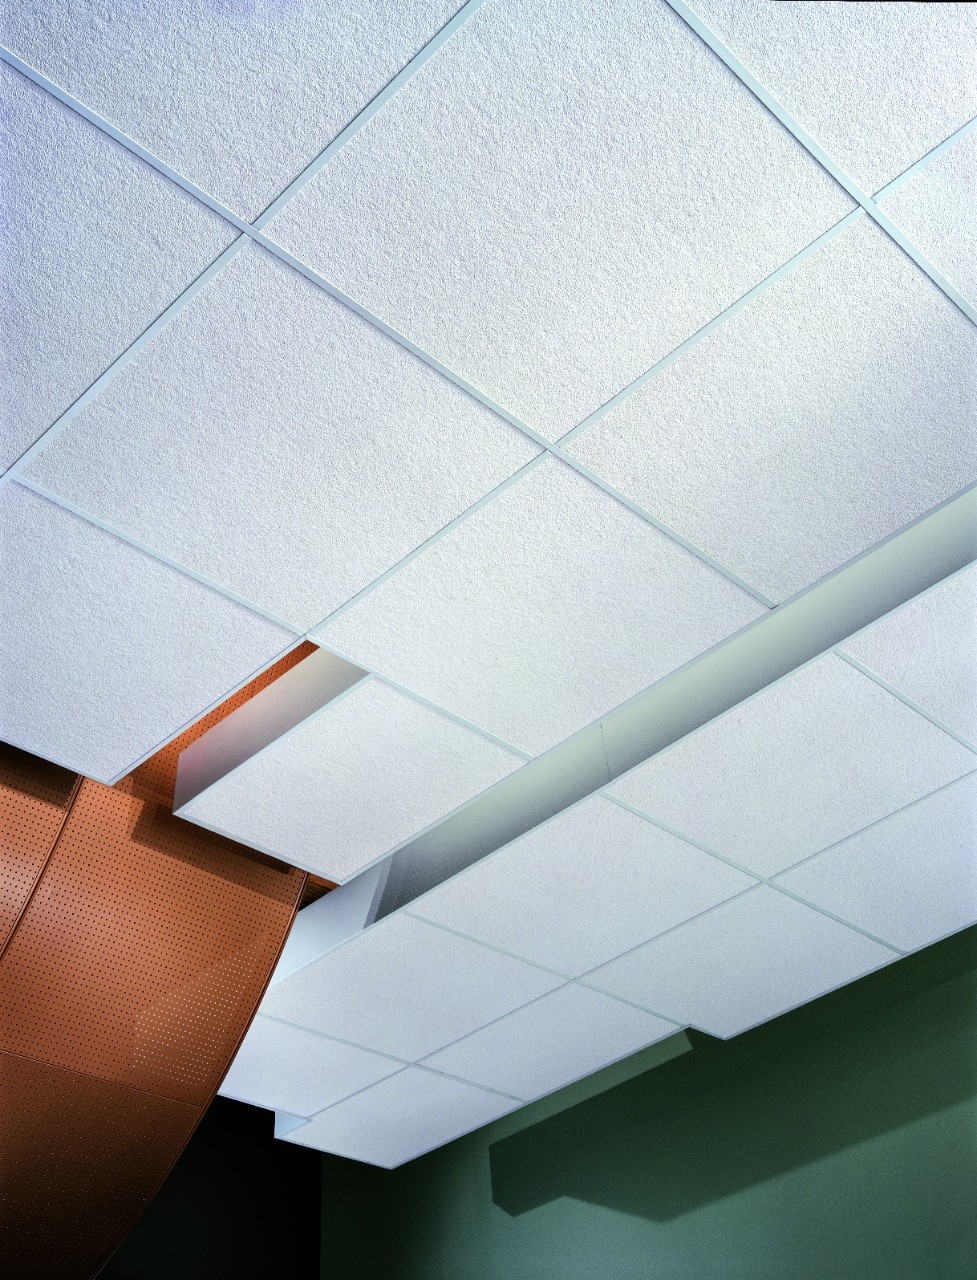 Usg Ceiling Tiles Distributors Usg Ceiling Tiles Distributors usg astro acoustical panels fire rated ceiling tiles 977 X 1280